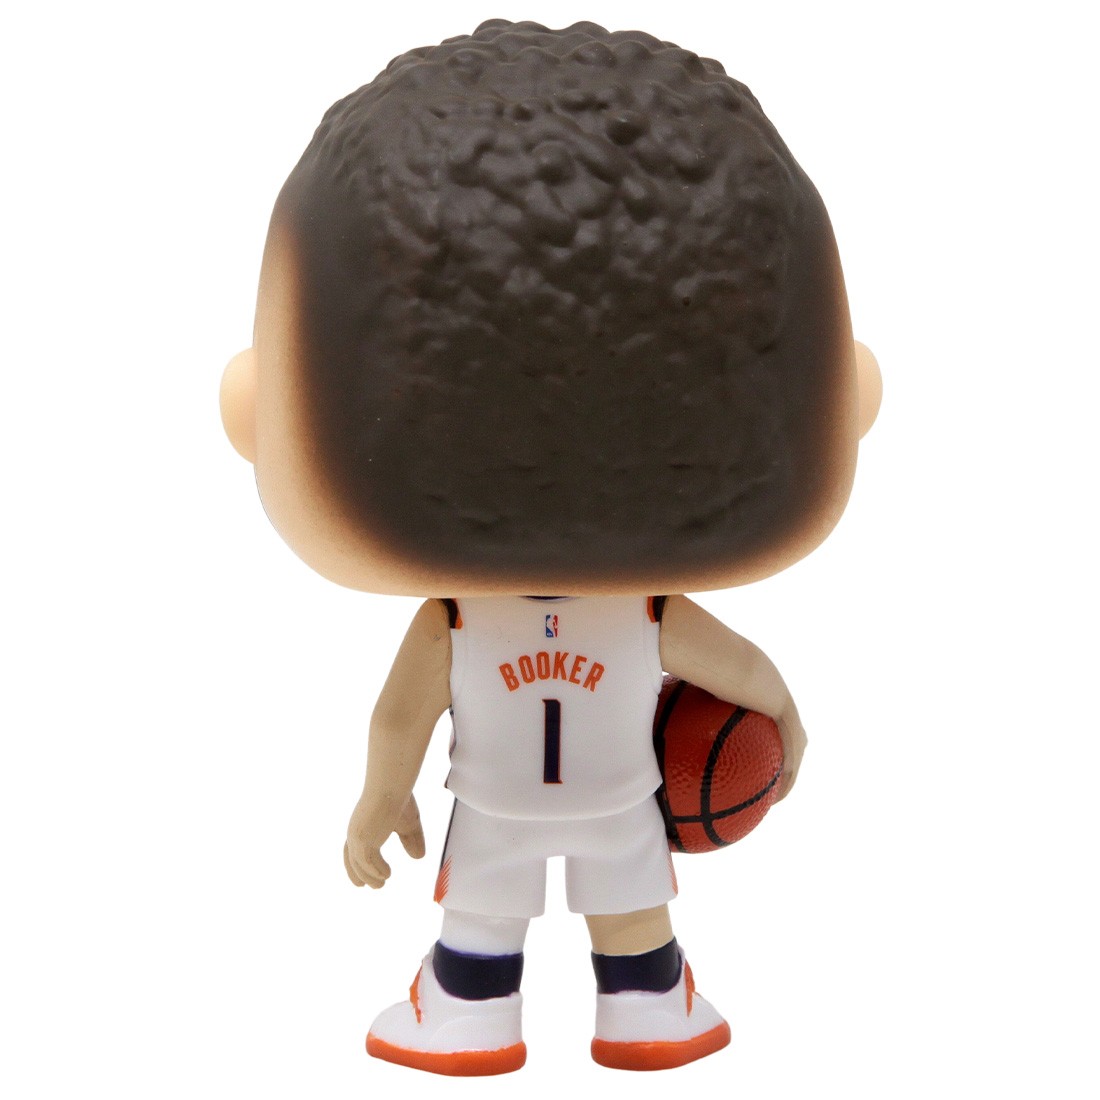 Funko Pop! NBA Basketball - Devin Booker Phoenix Suns #153